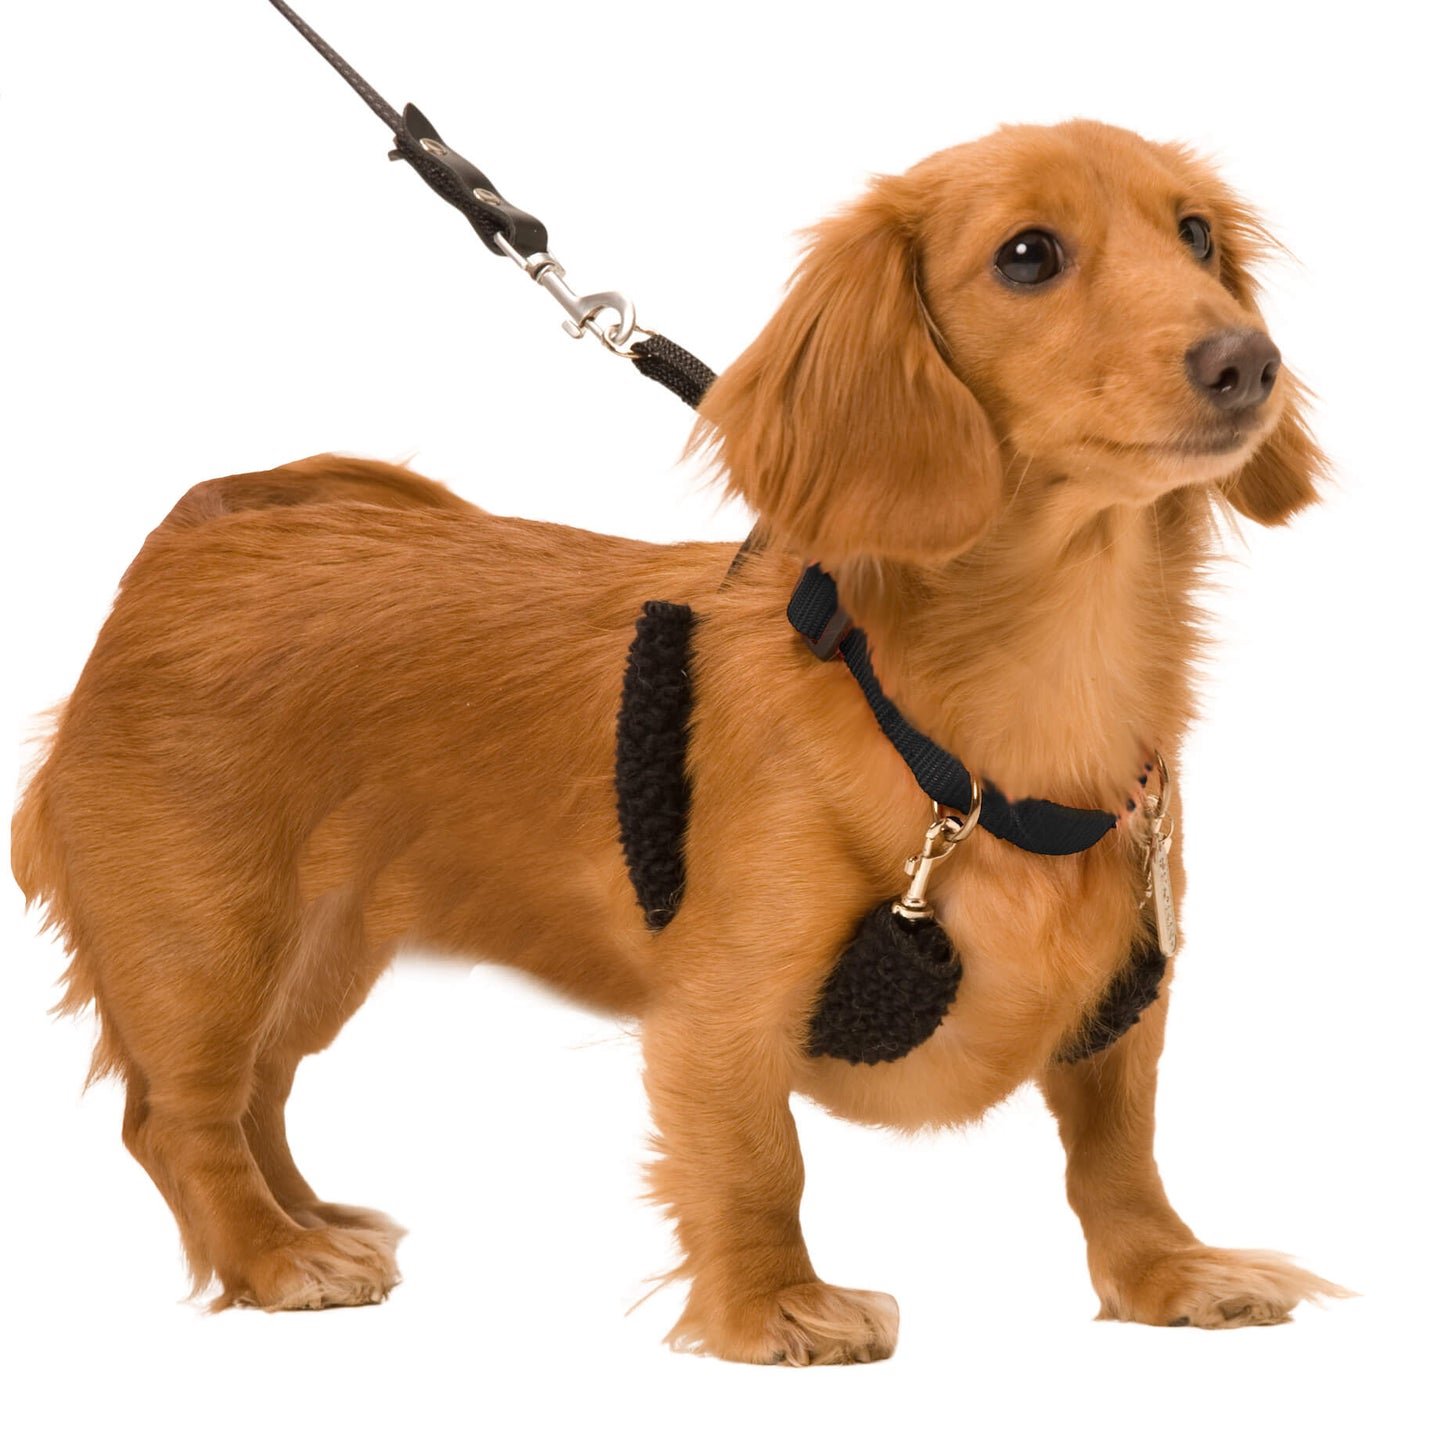 Sporn Training Halter Dog Harness